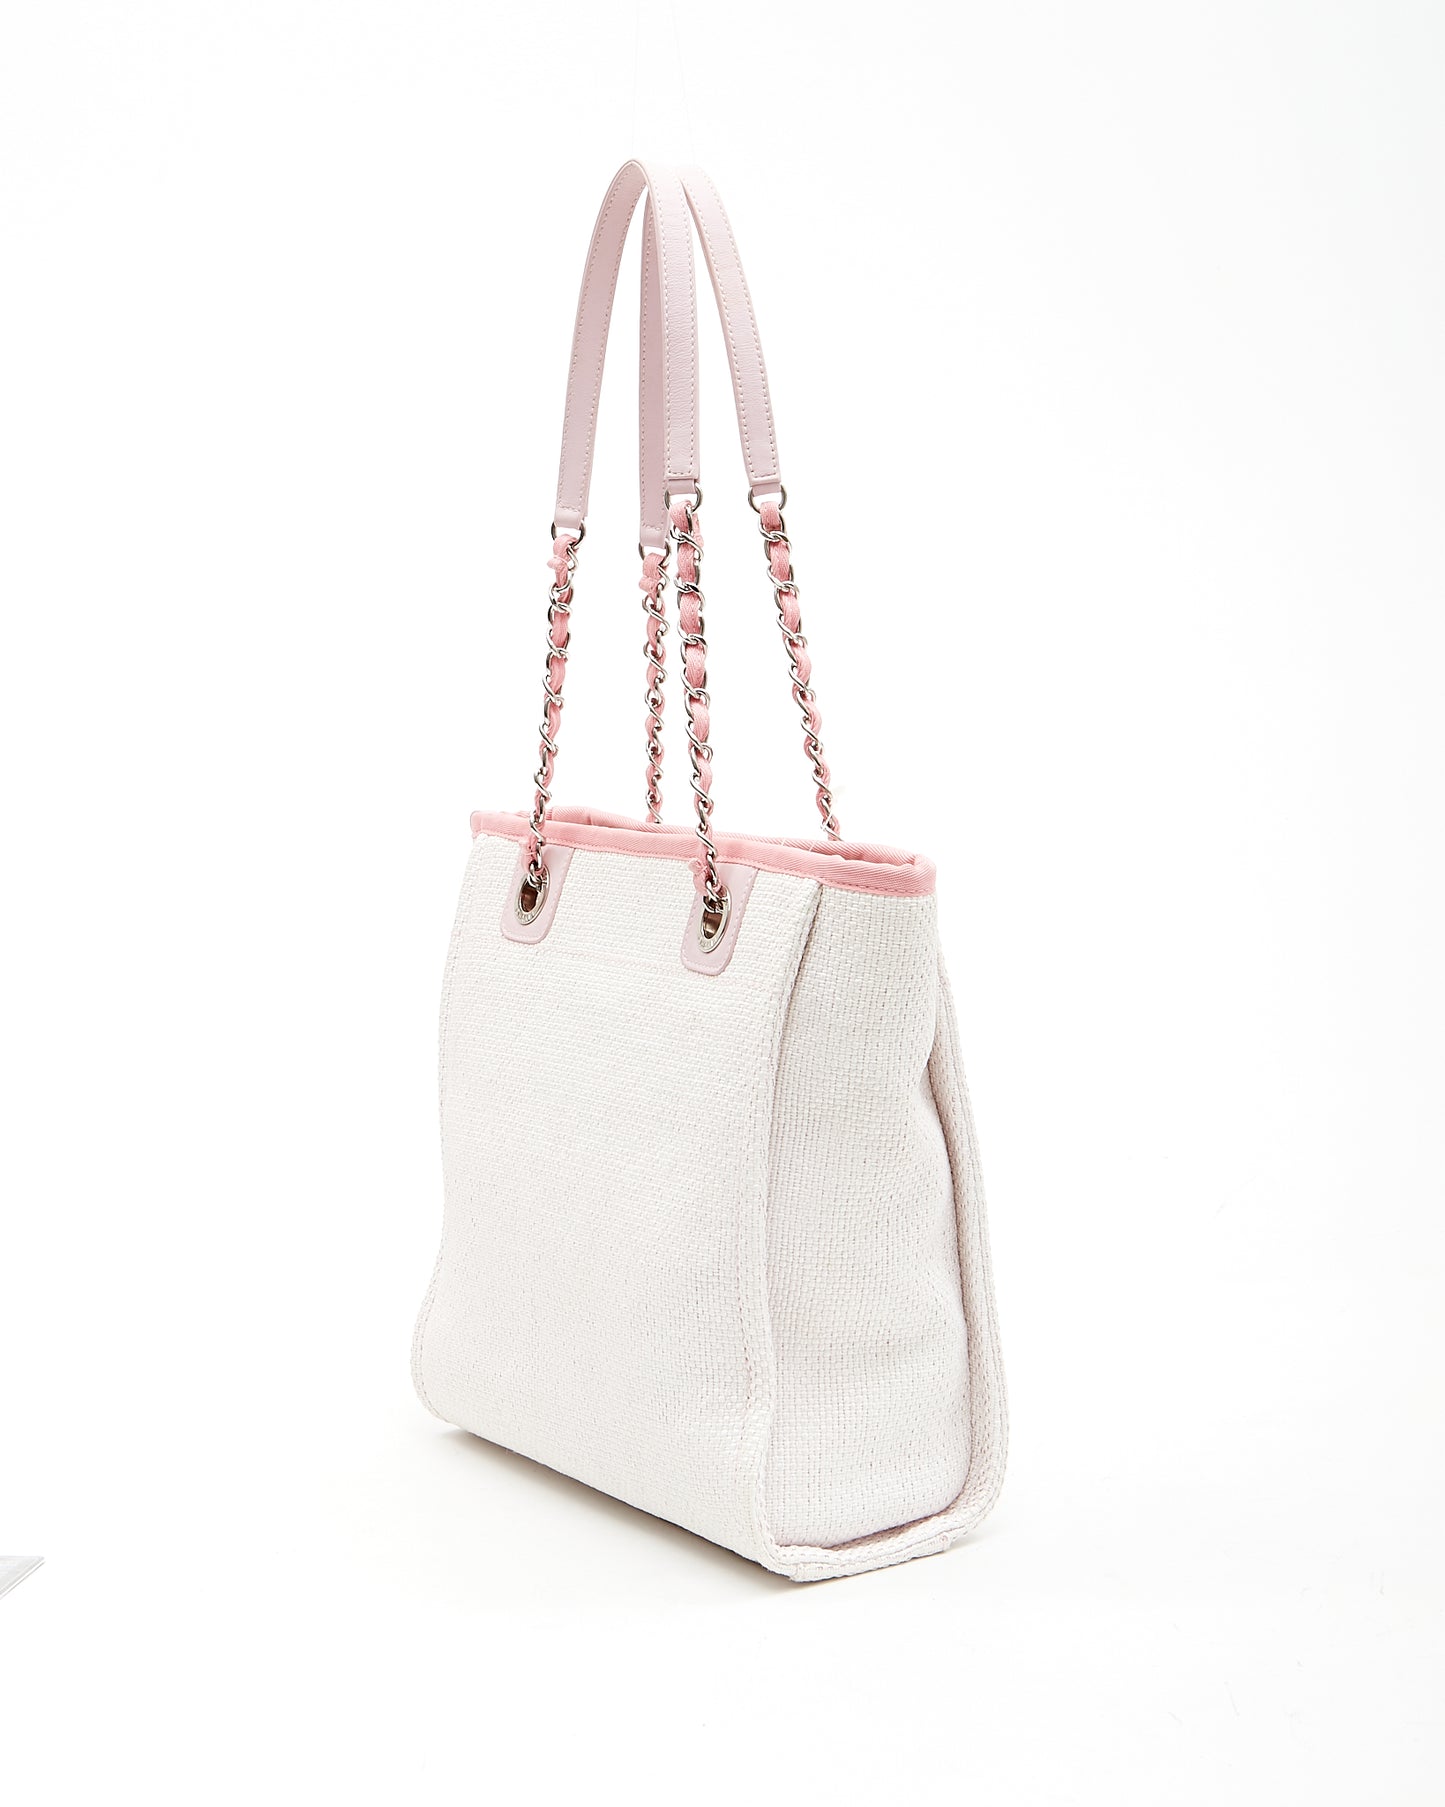 Chanel Cream & Pink Canvas Small Deauville Small Tote Bag